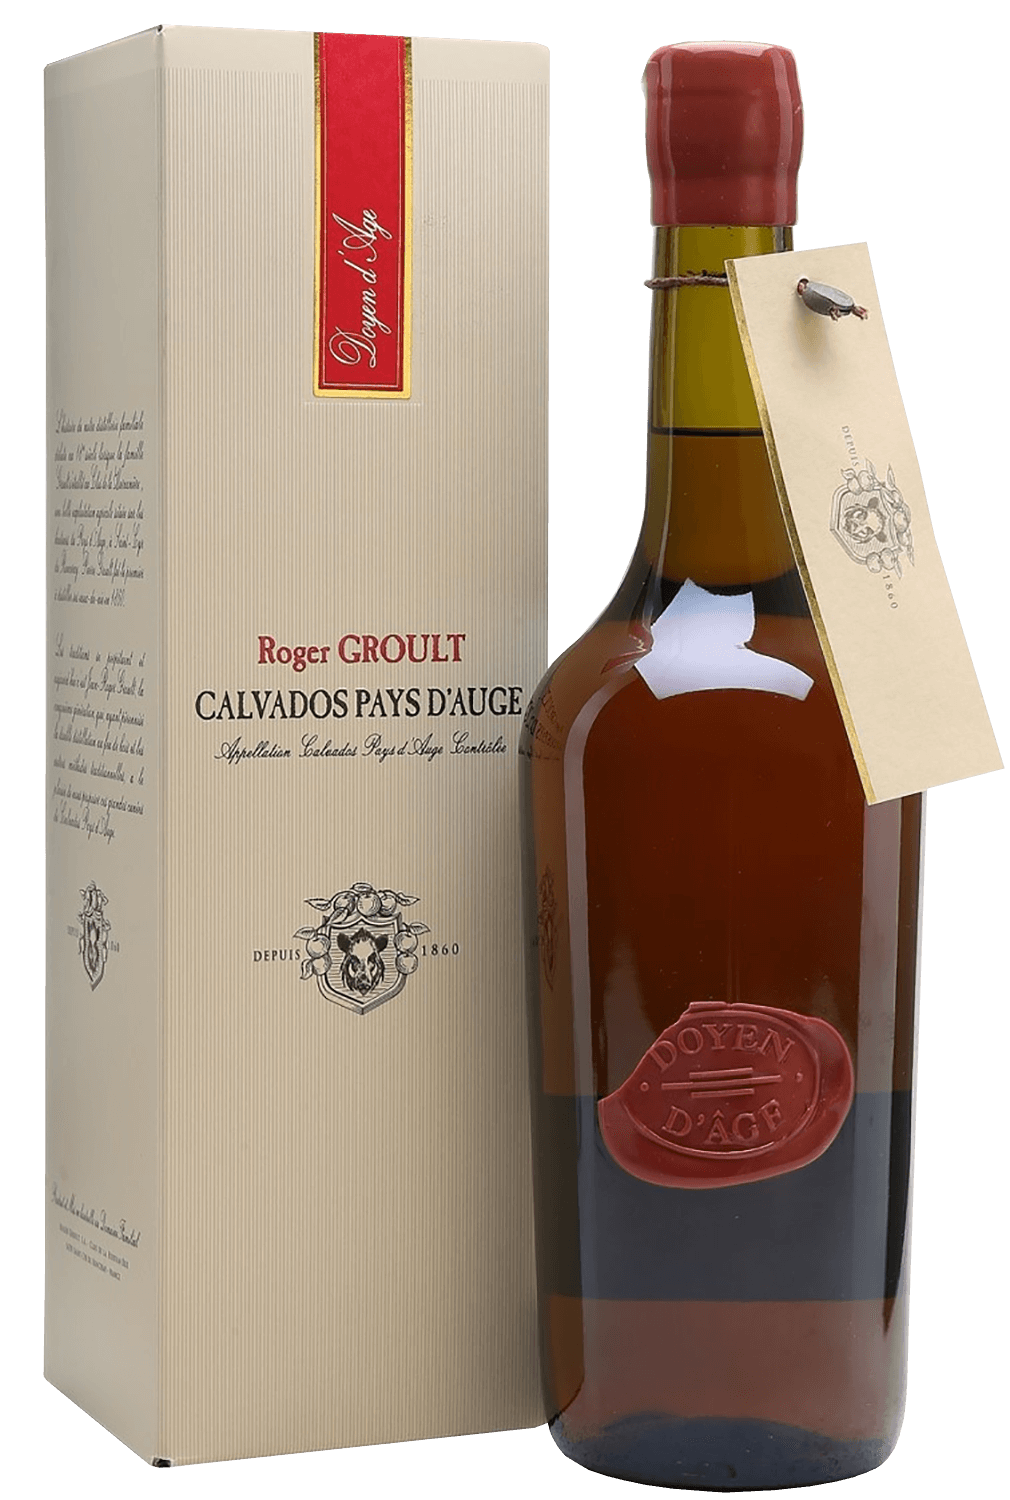 Doyen d'Or Calvados Pays D'Auge AOC Roger Groult (gift box)